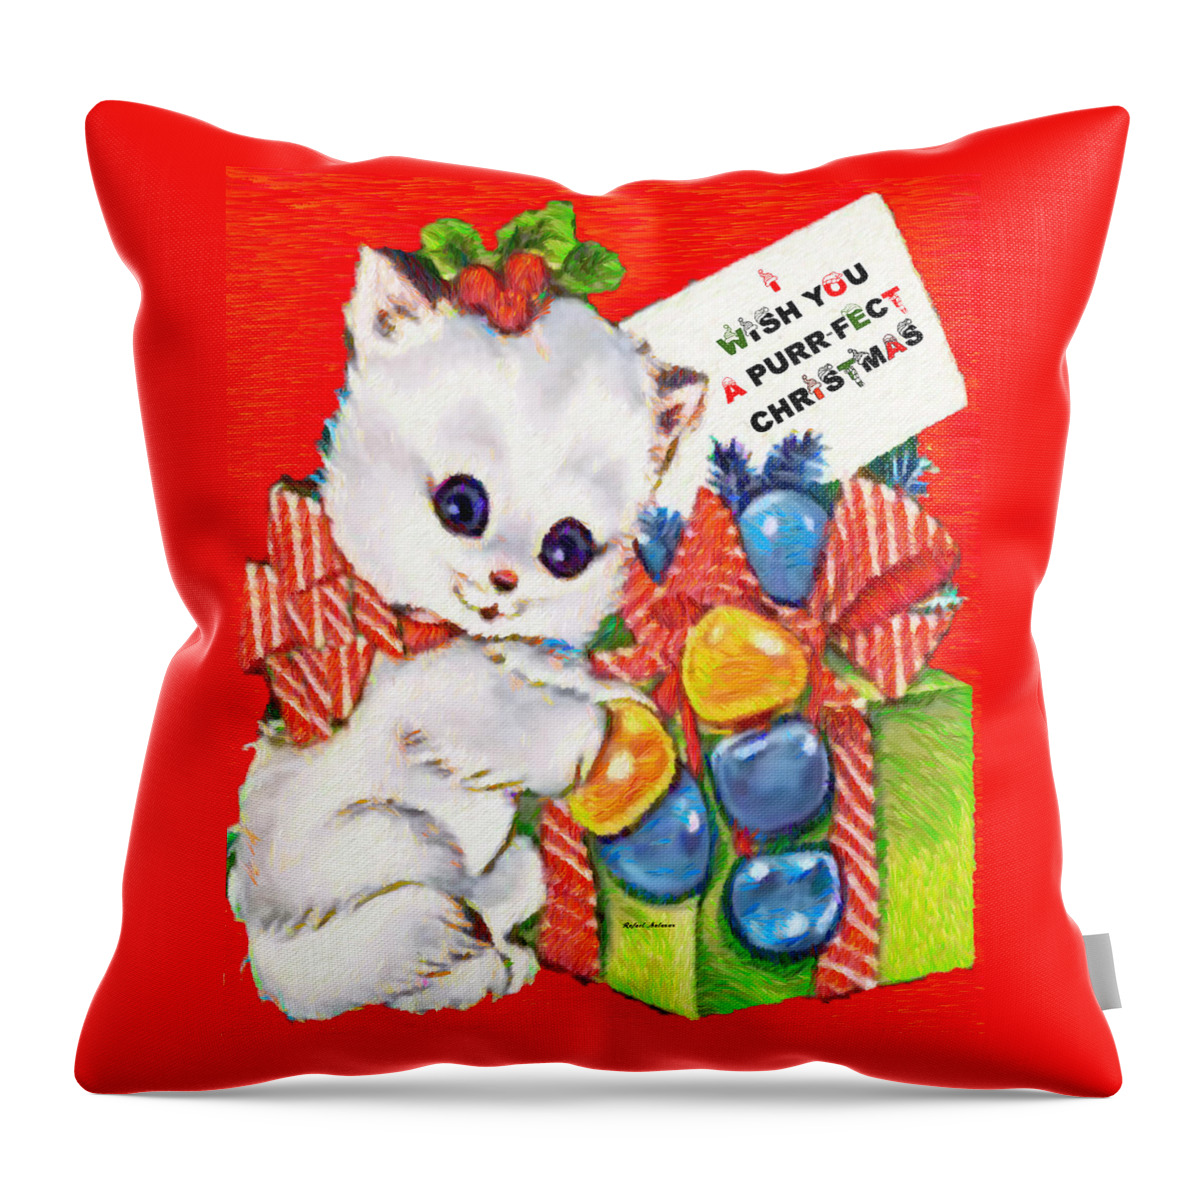 Rafael Salazar Throw Pillow featuring the digital art Kitty at Christmas time by Rafael Salazar